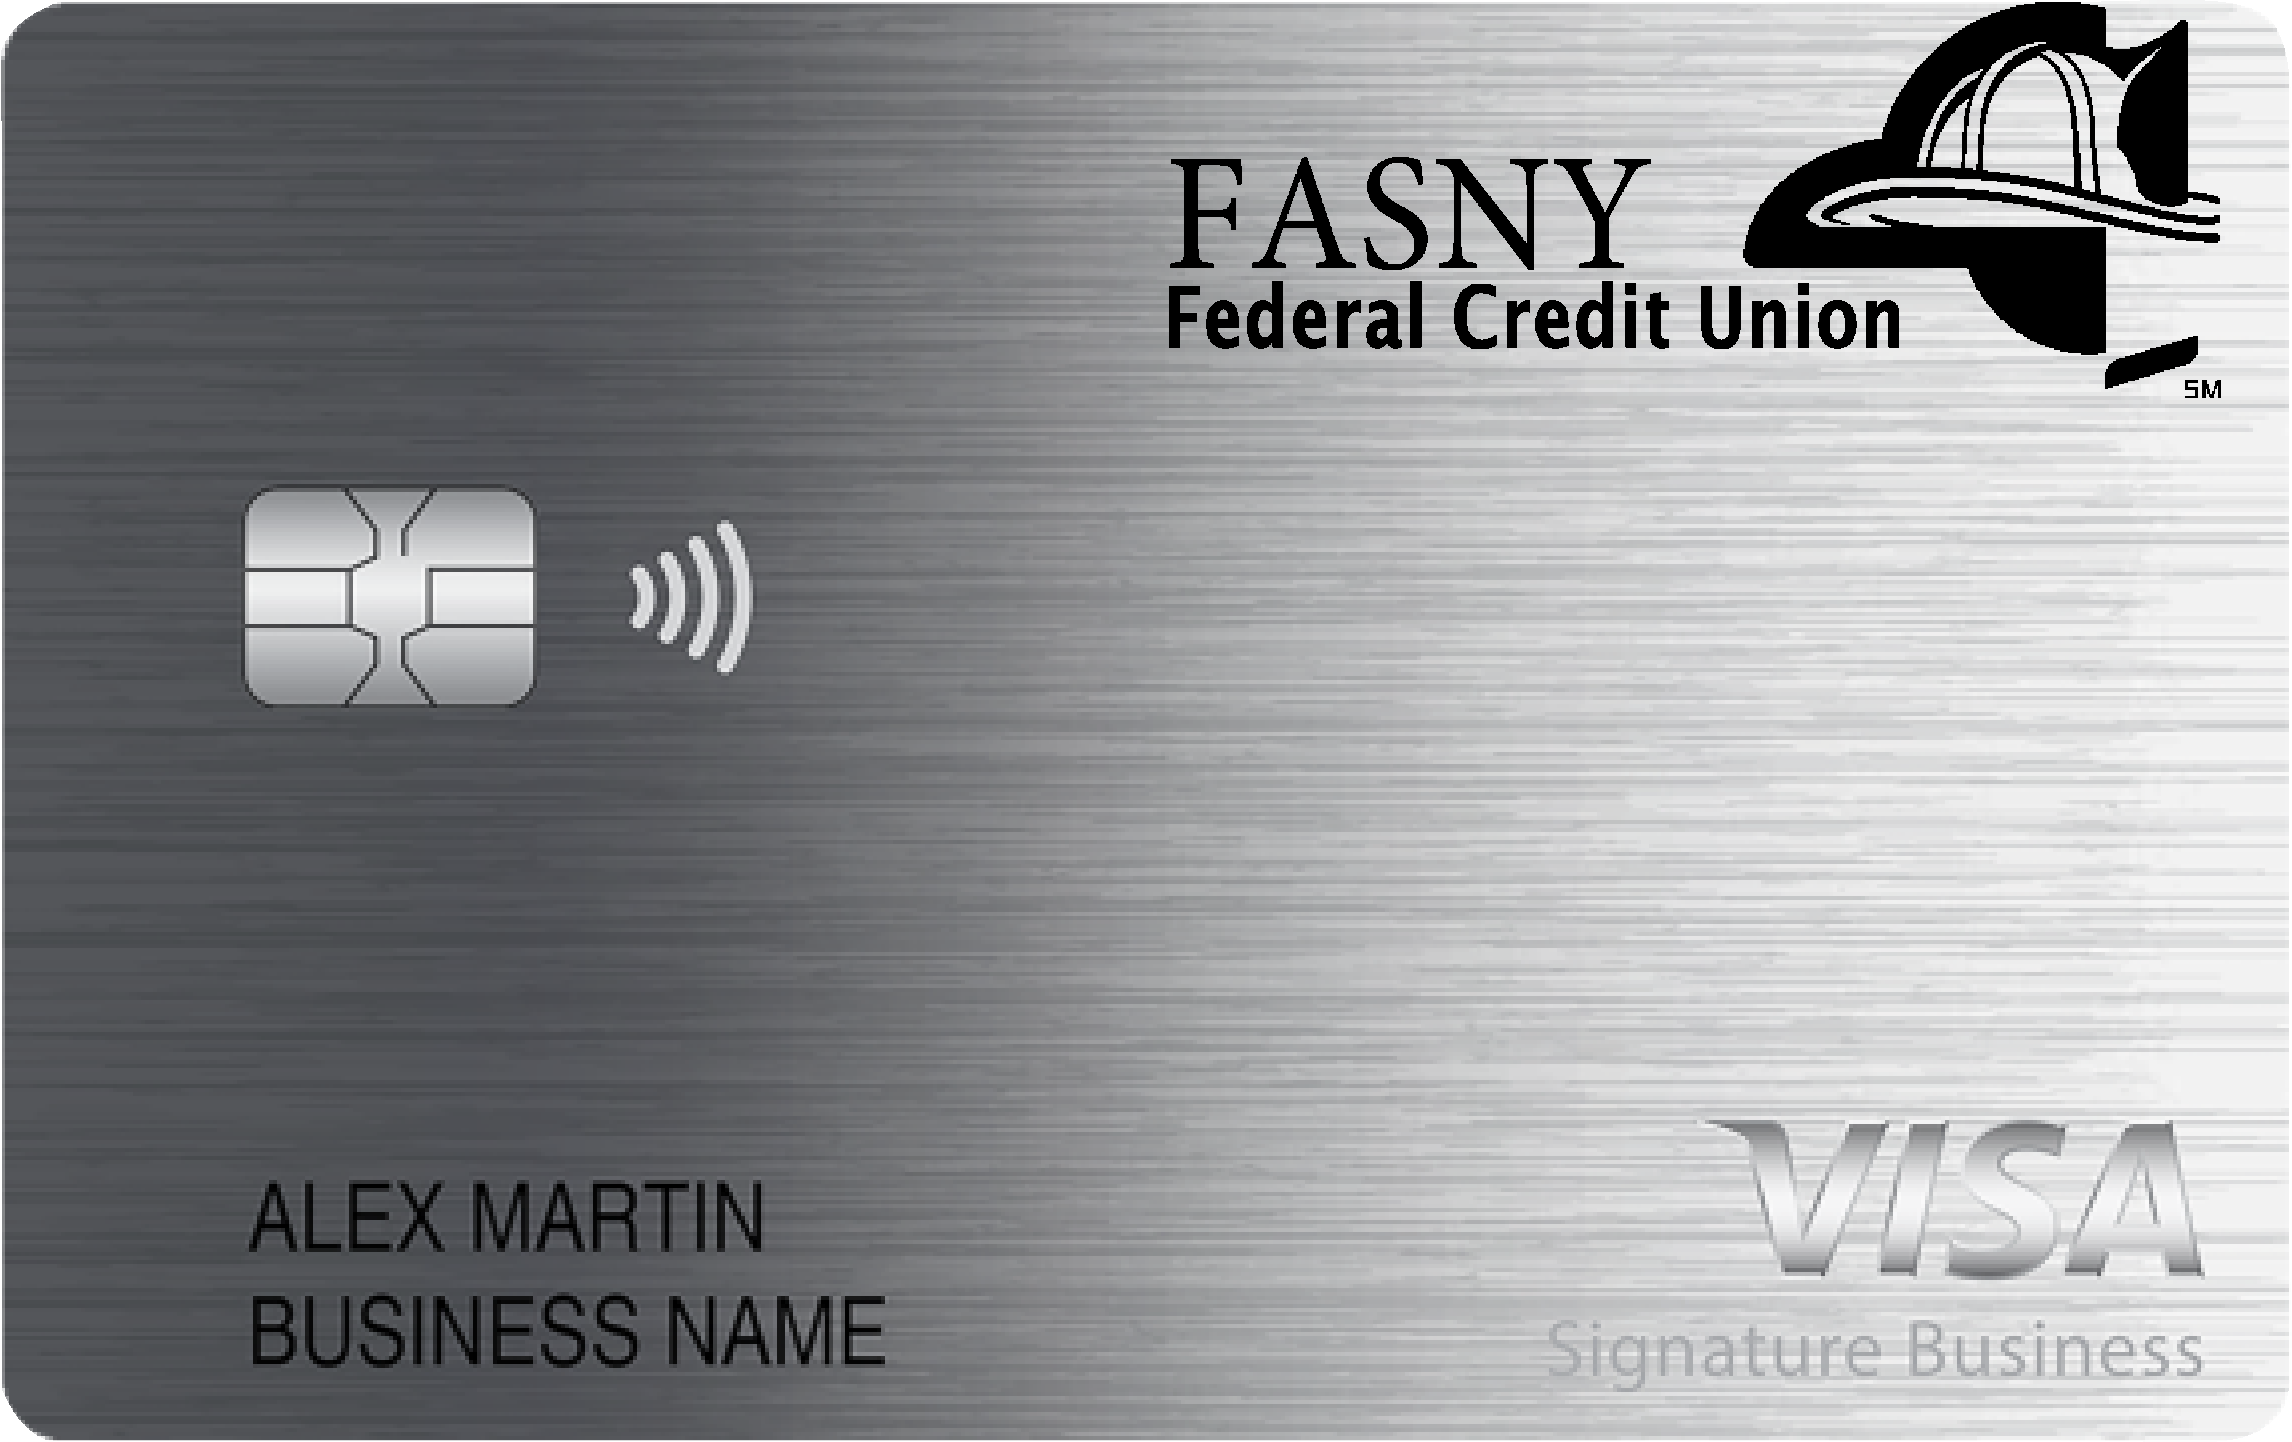 FASNY Federal Credit Union Smart Business Rewards Card